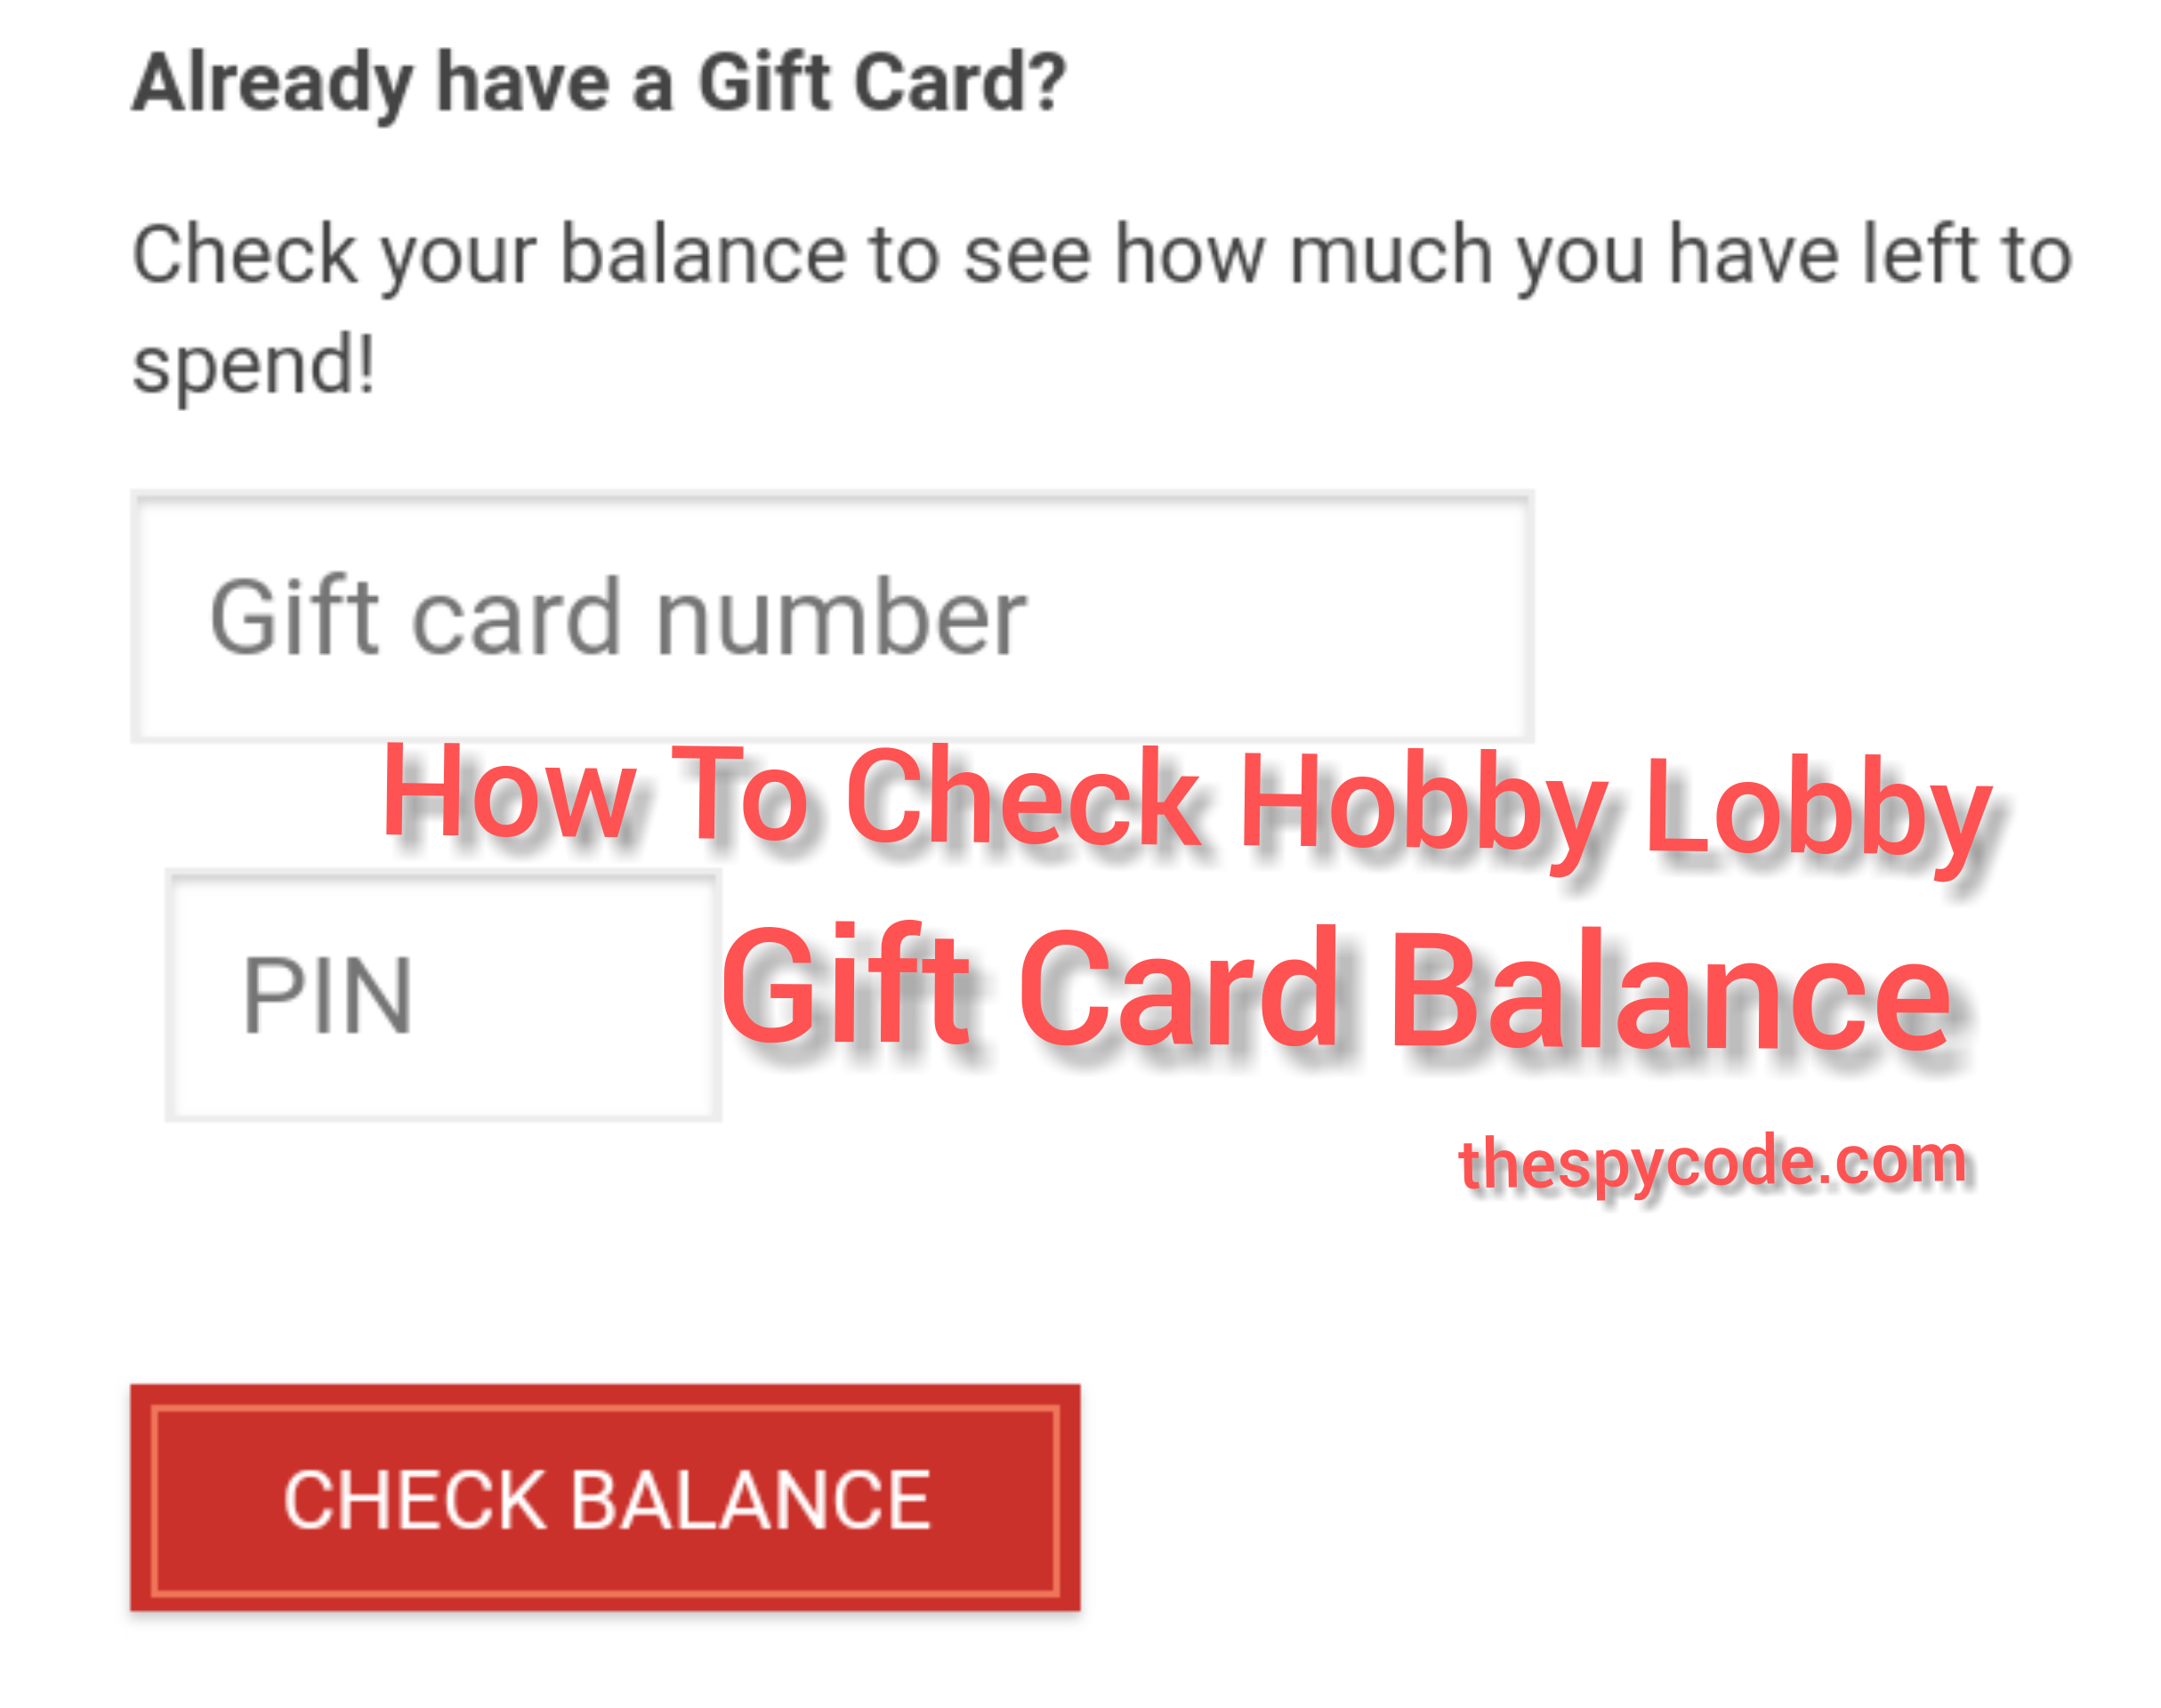 Hobby Lobby Gift Card Balance Check - How To Check A Hobby Lobby Gift